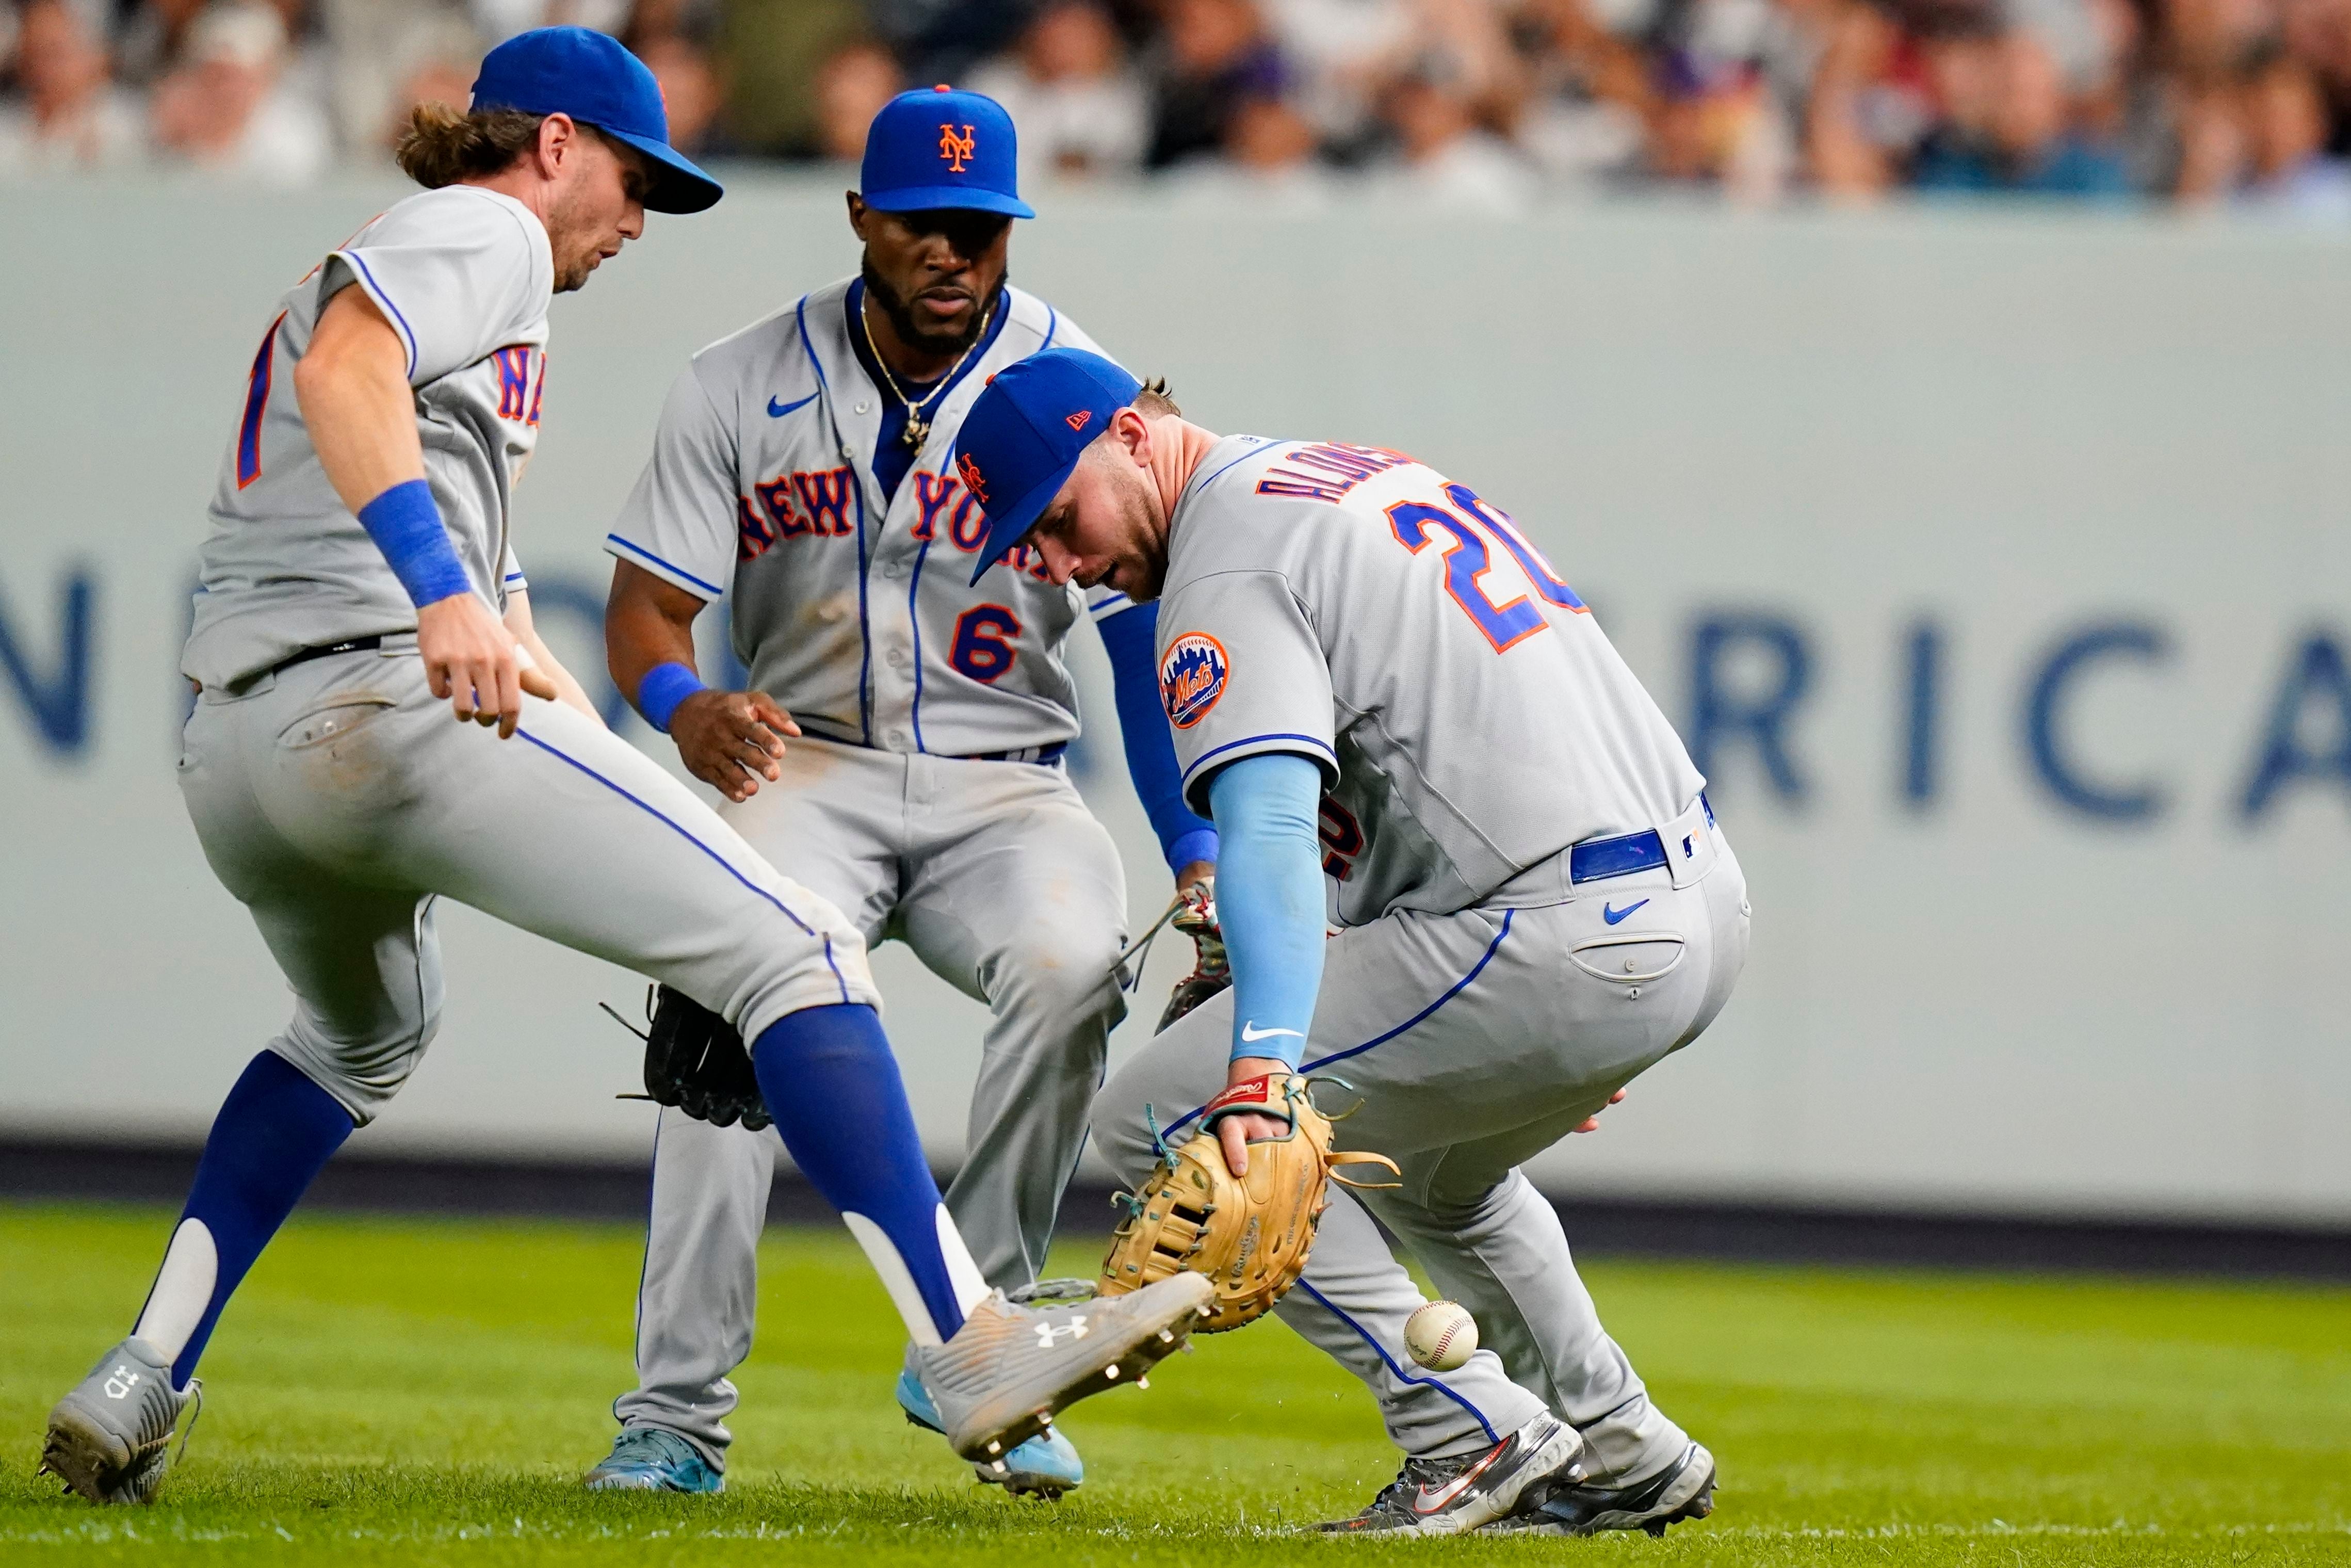 Judge 48th HR, Yanks beat Mets 4-2 to sweep Subway Series